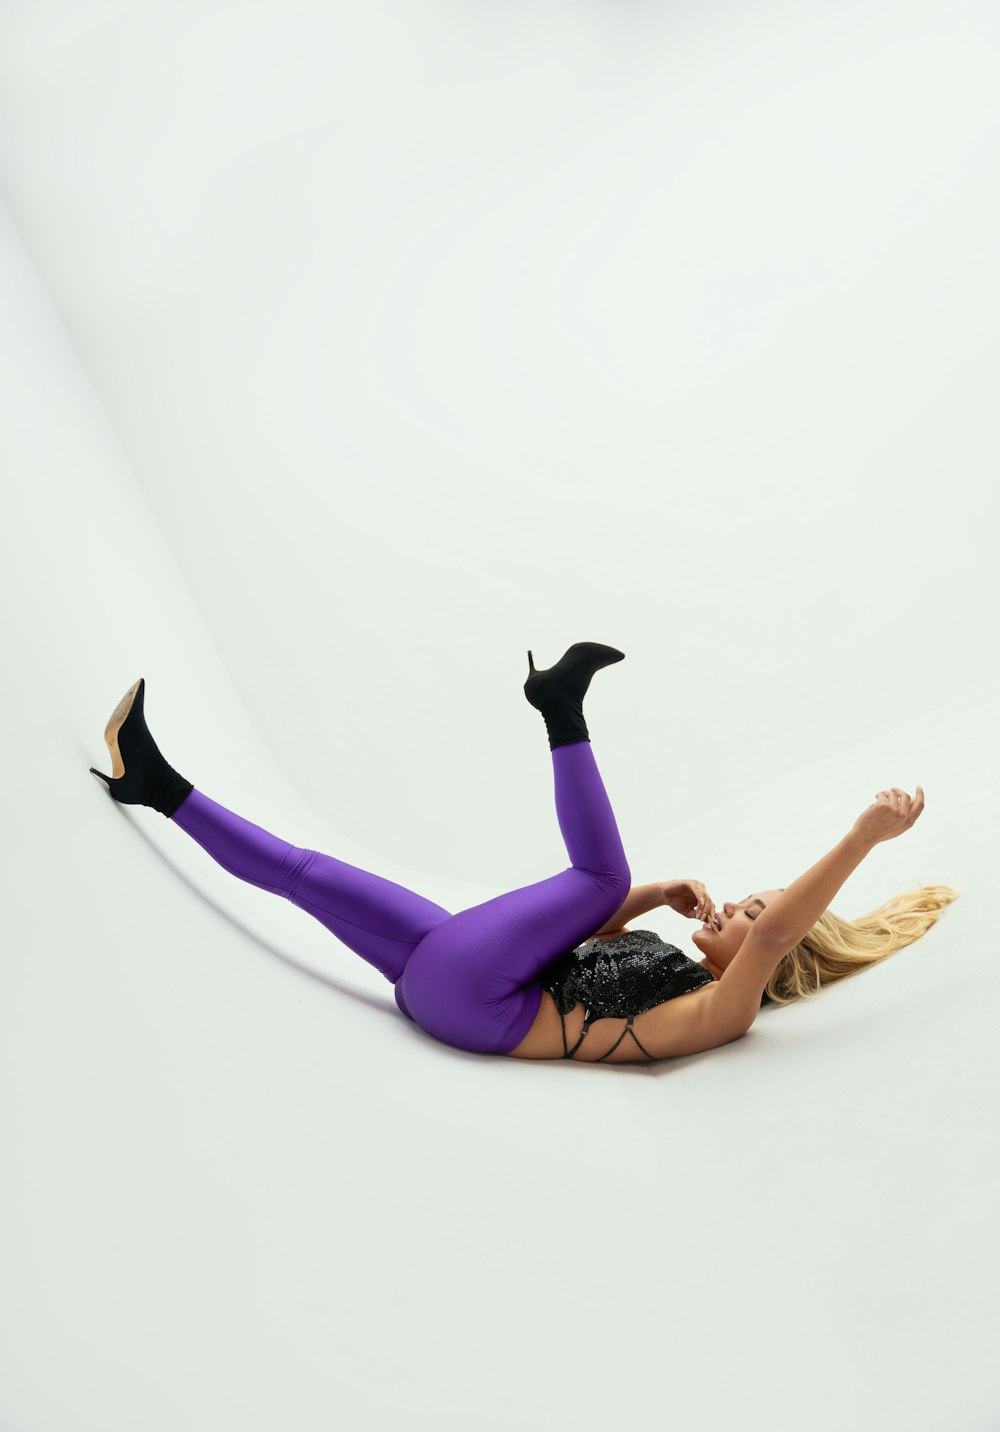 una donna sdraiata a terra con le gambe divaricate